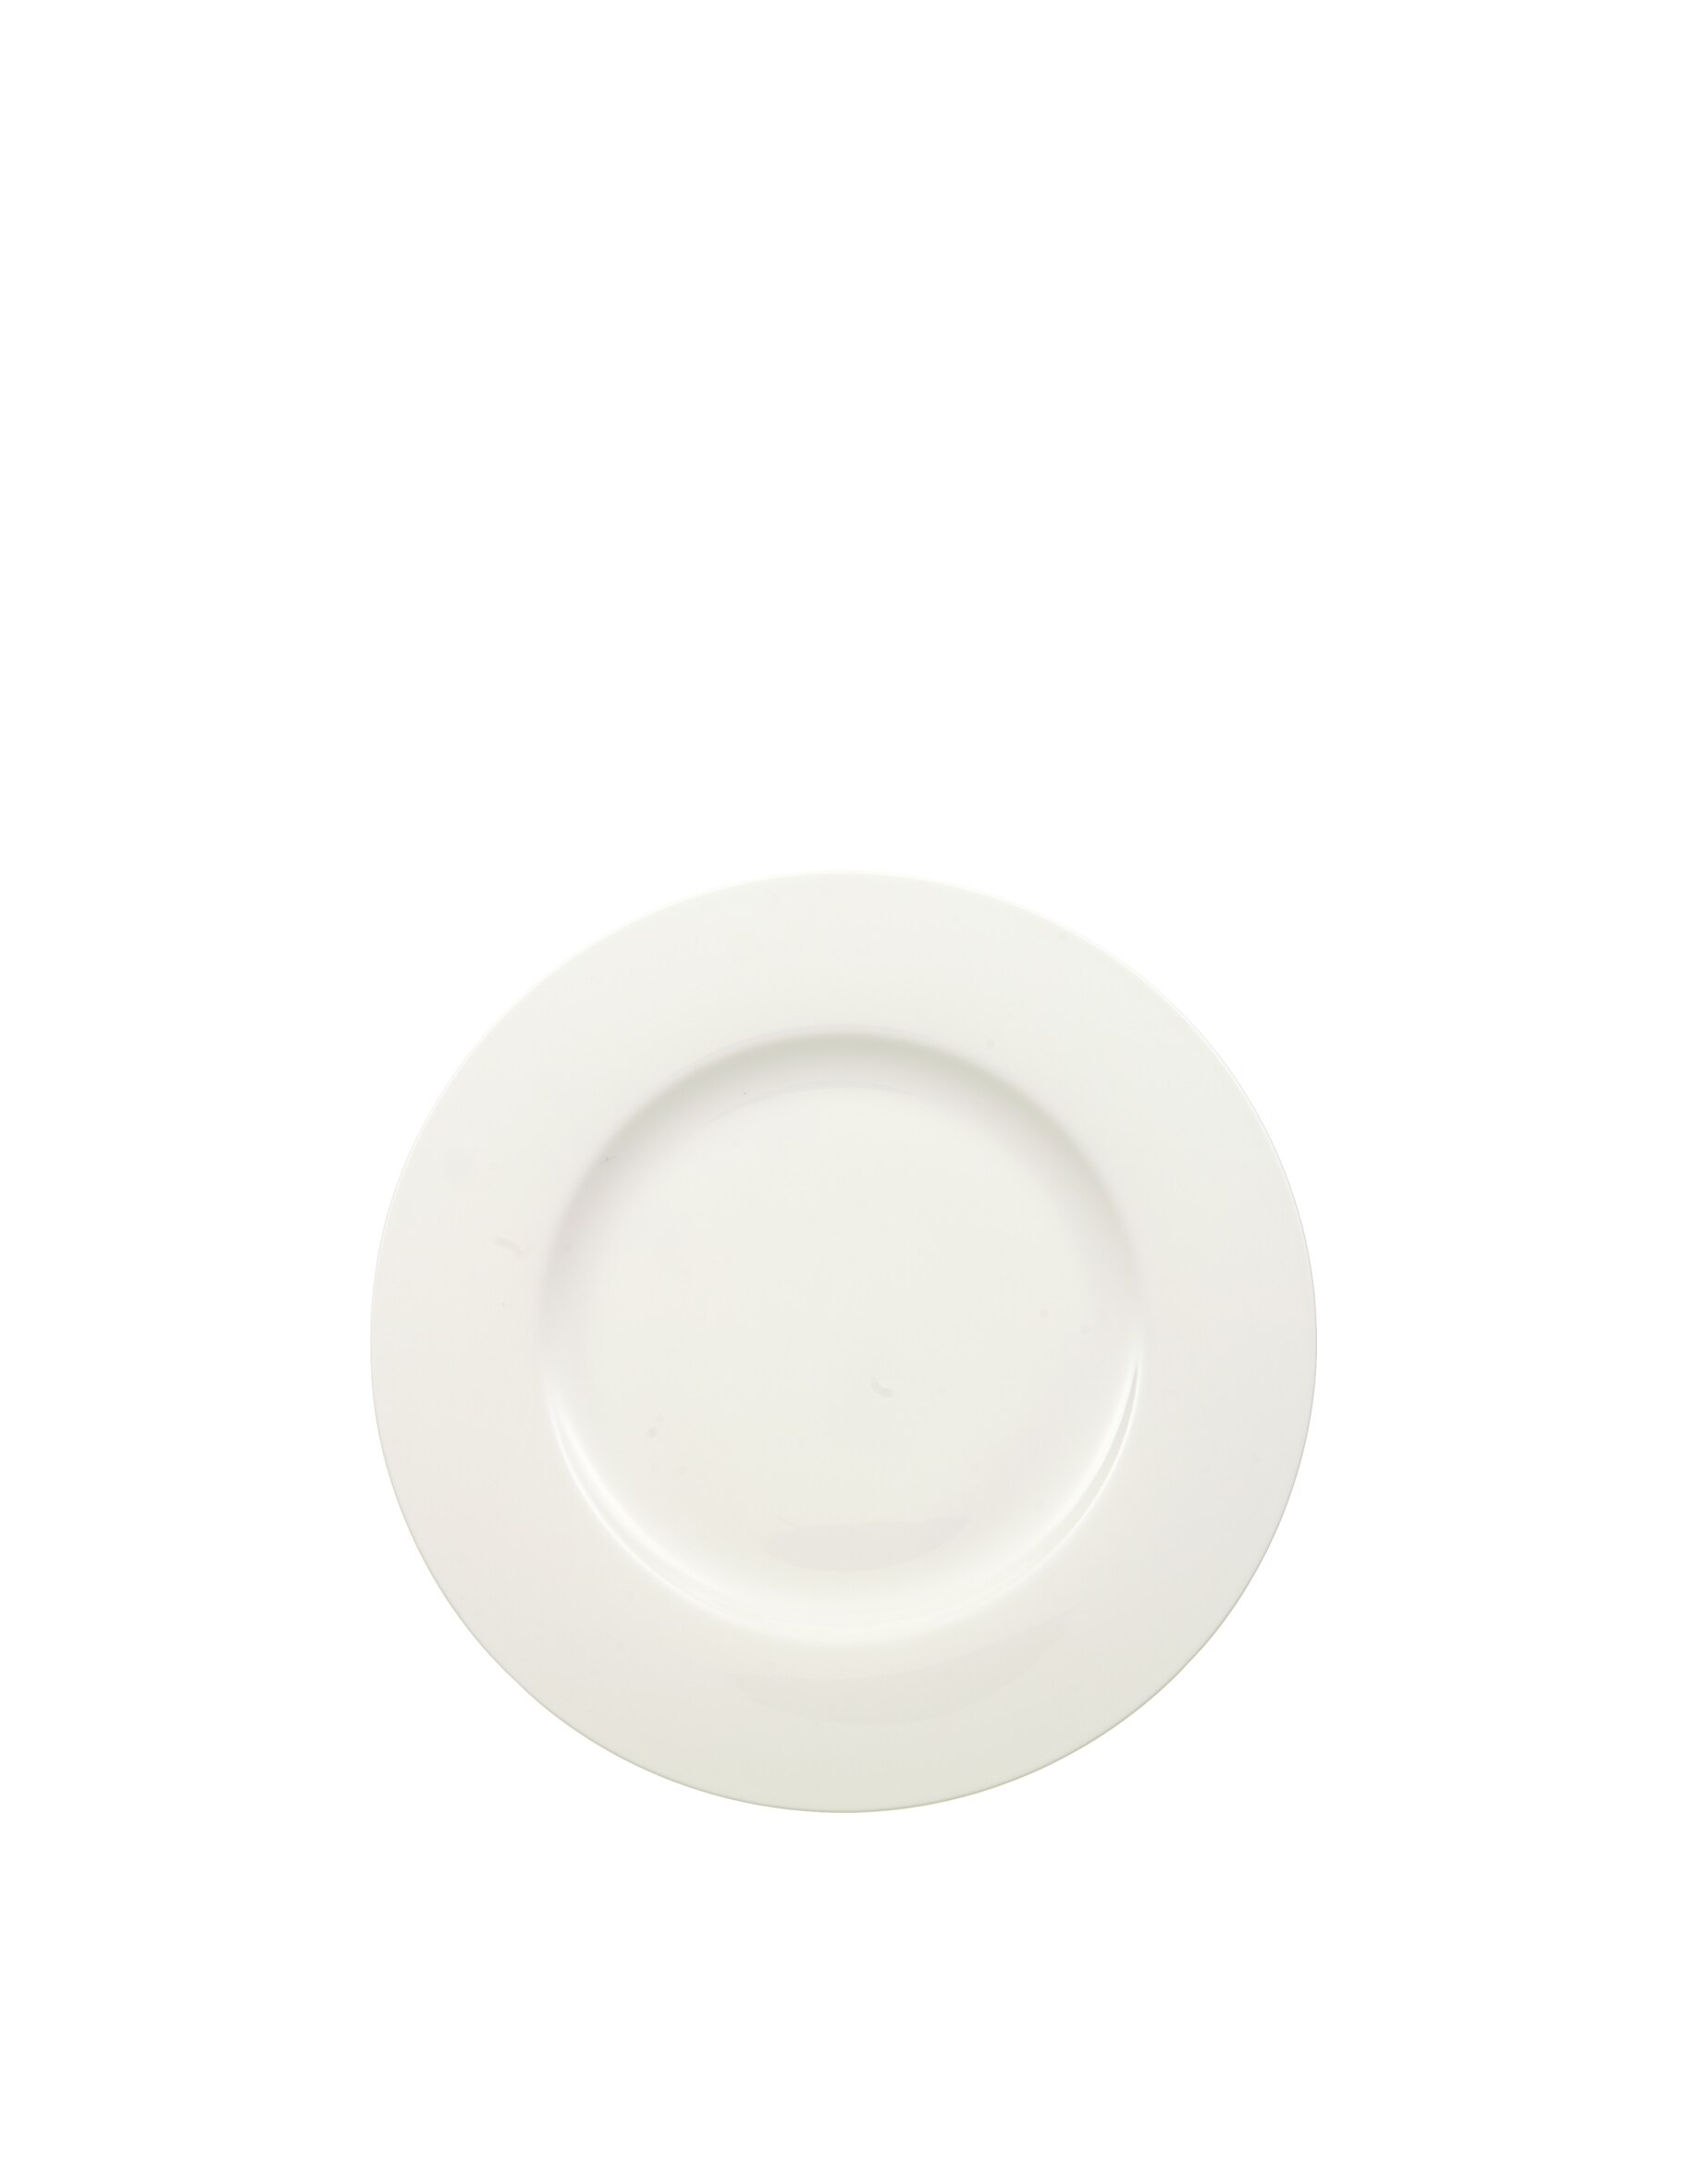 Плоская тарелка Анмут 28см Villeroy & Boch плоская тарелка анмут 28см villeroy